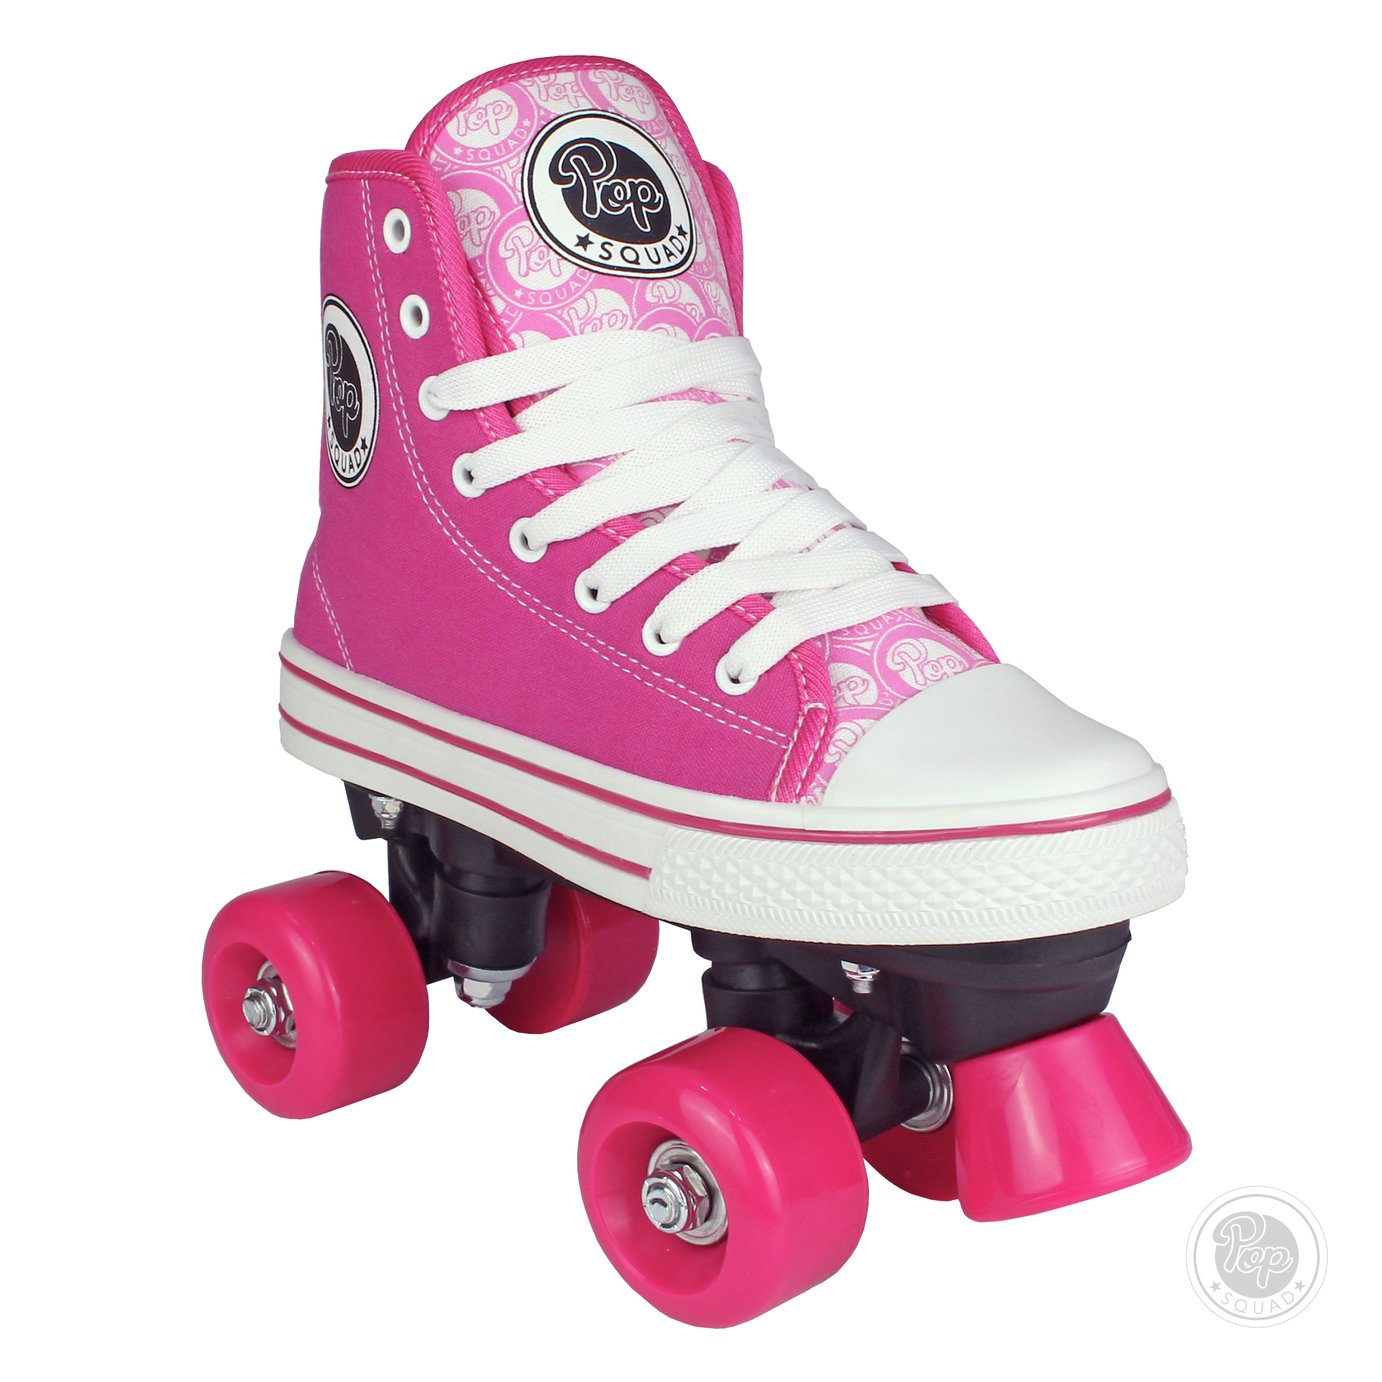 Pop Squad Pink Midtown Quad Skate - Size 4